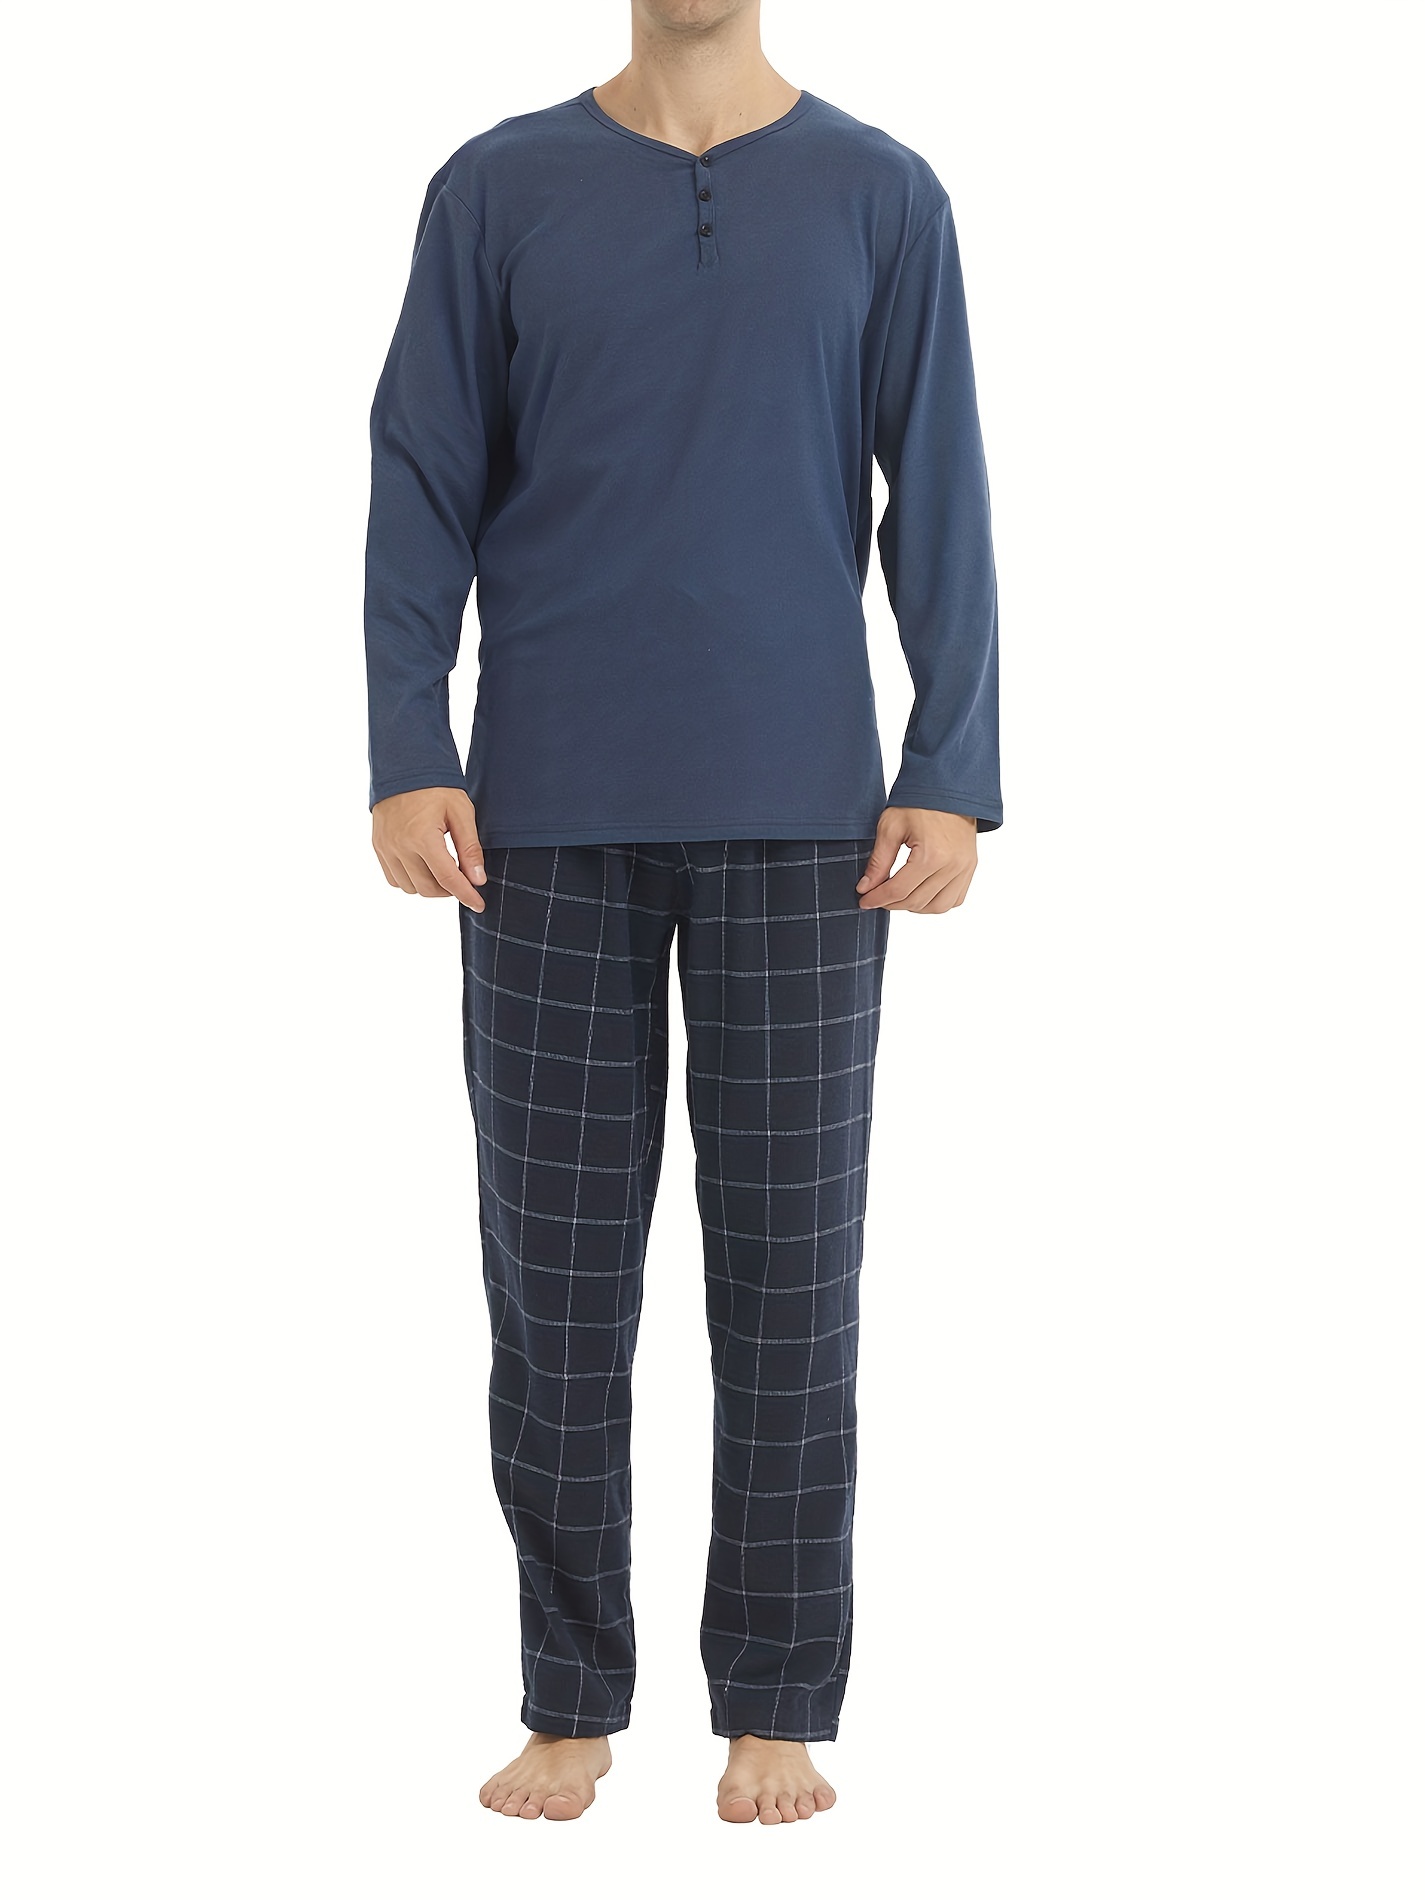 LANBAOSI Flannel Pajamas for Men Set Long Sleeve Soft Cotton Loungewear  Sleepwear Plaid Shirt Pants Pjs Top Bottom